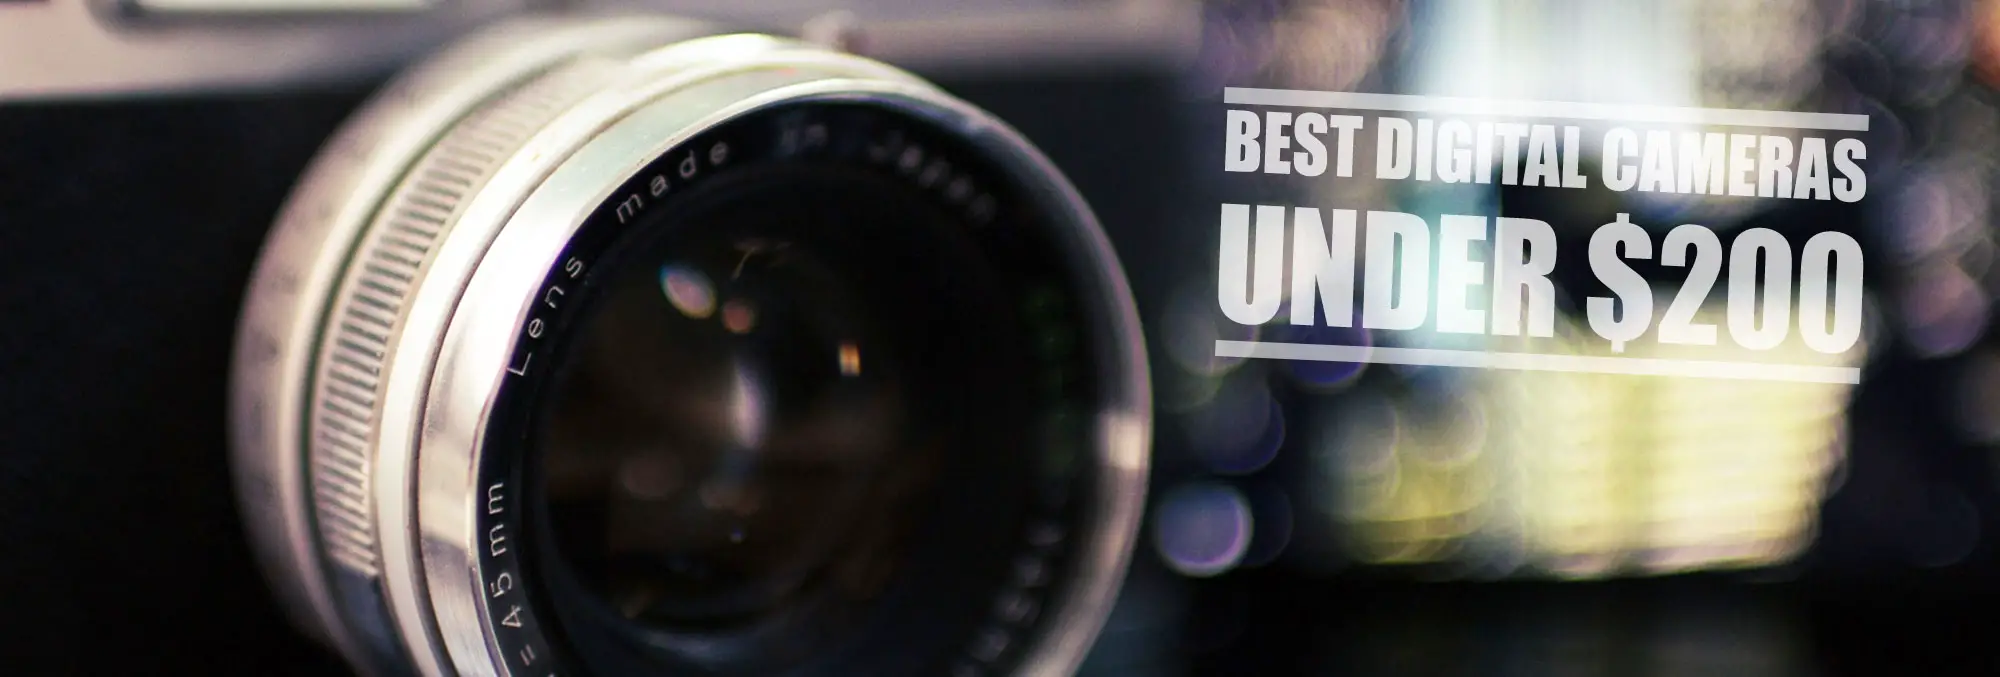 Best point and shoot cameras under 200 - header